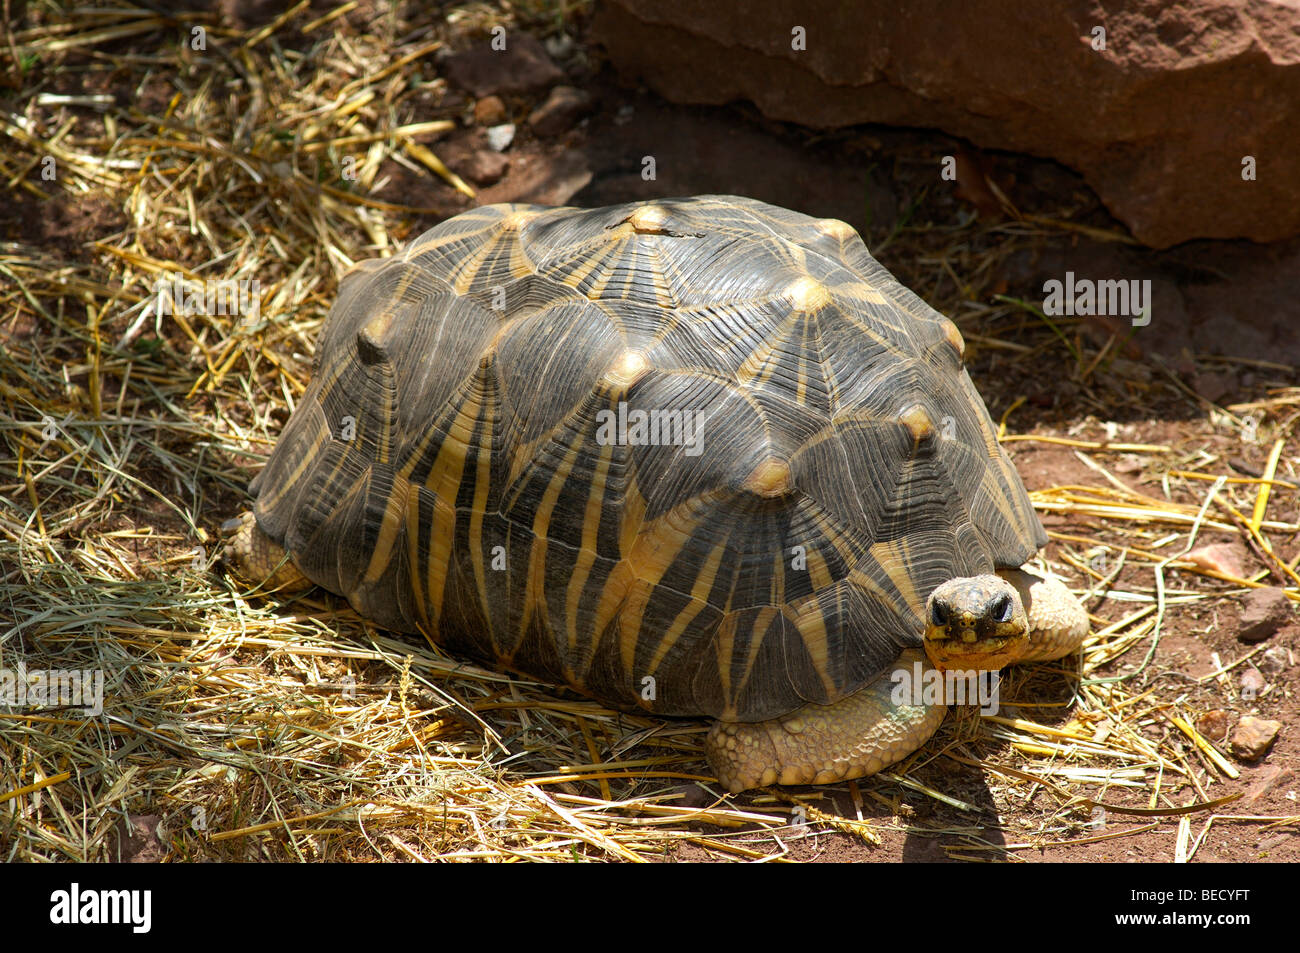 Radiated tortoise (Geochelone radiata), from Madagascar, in captivity Stock Photo